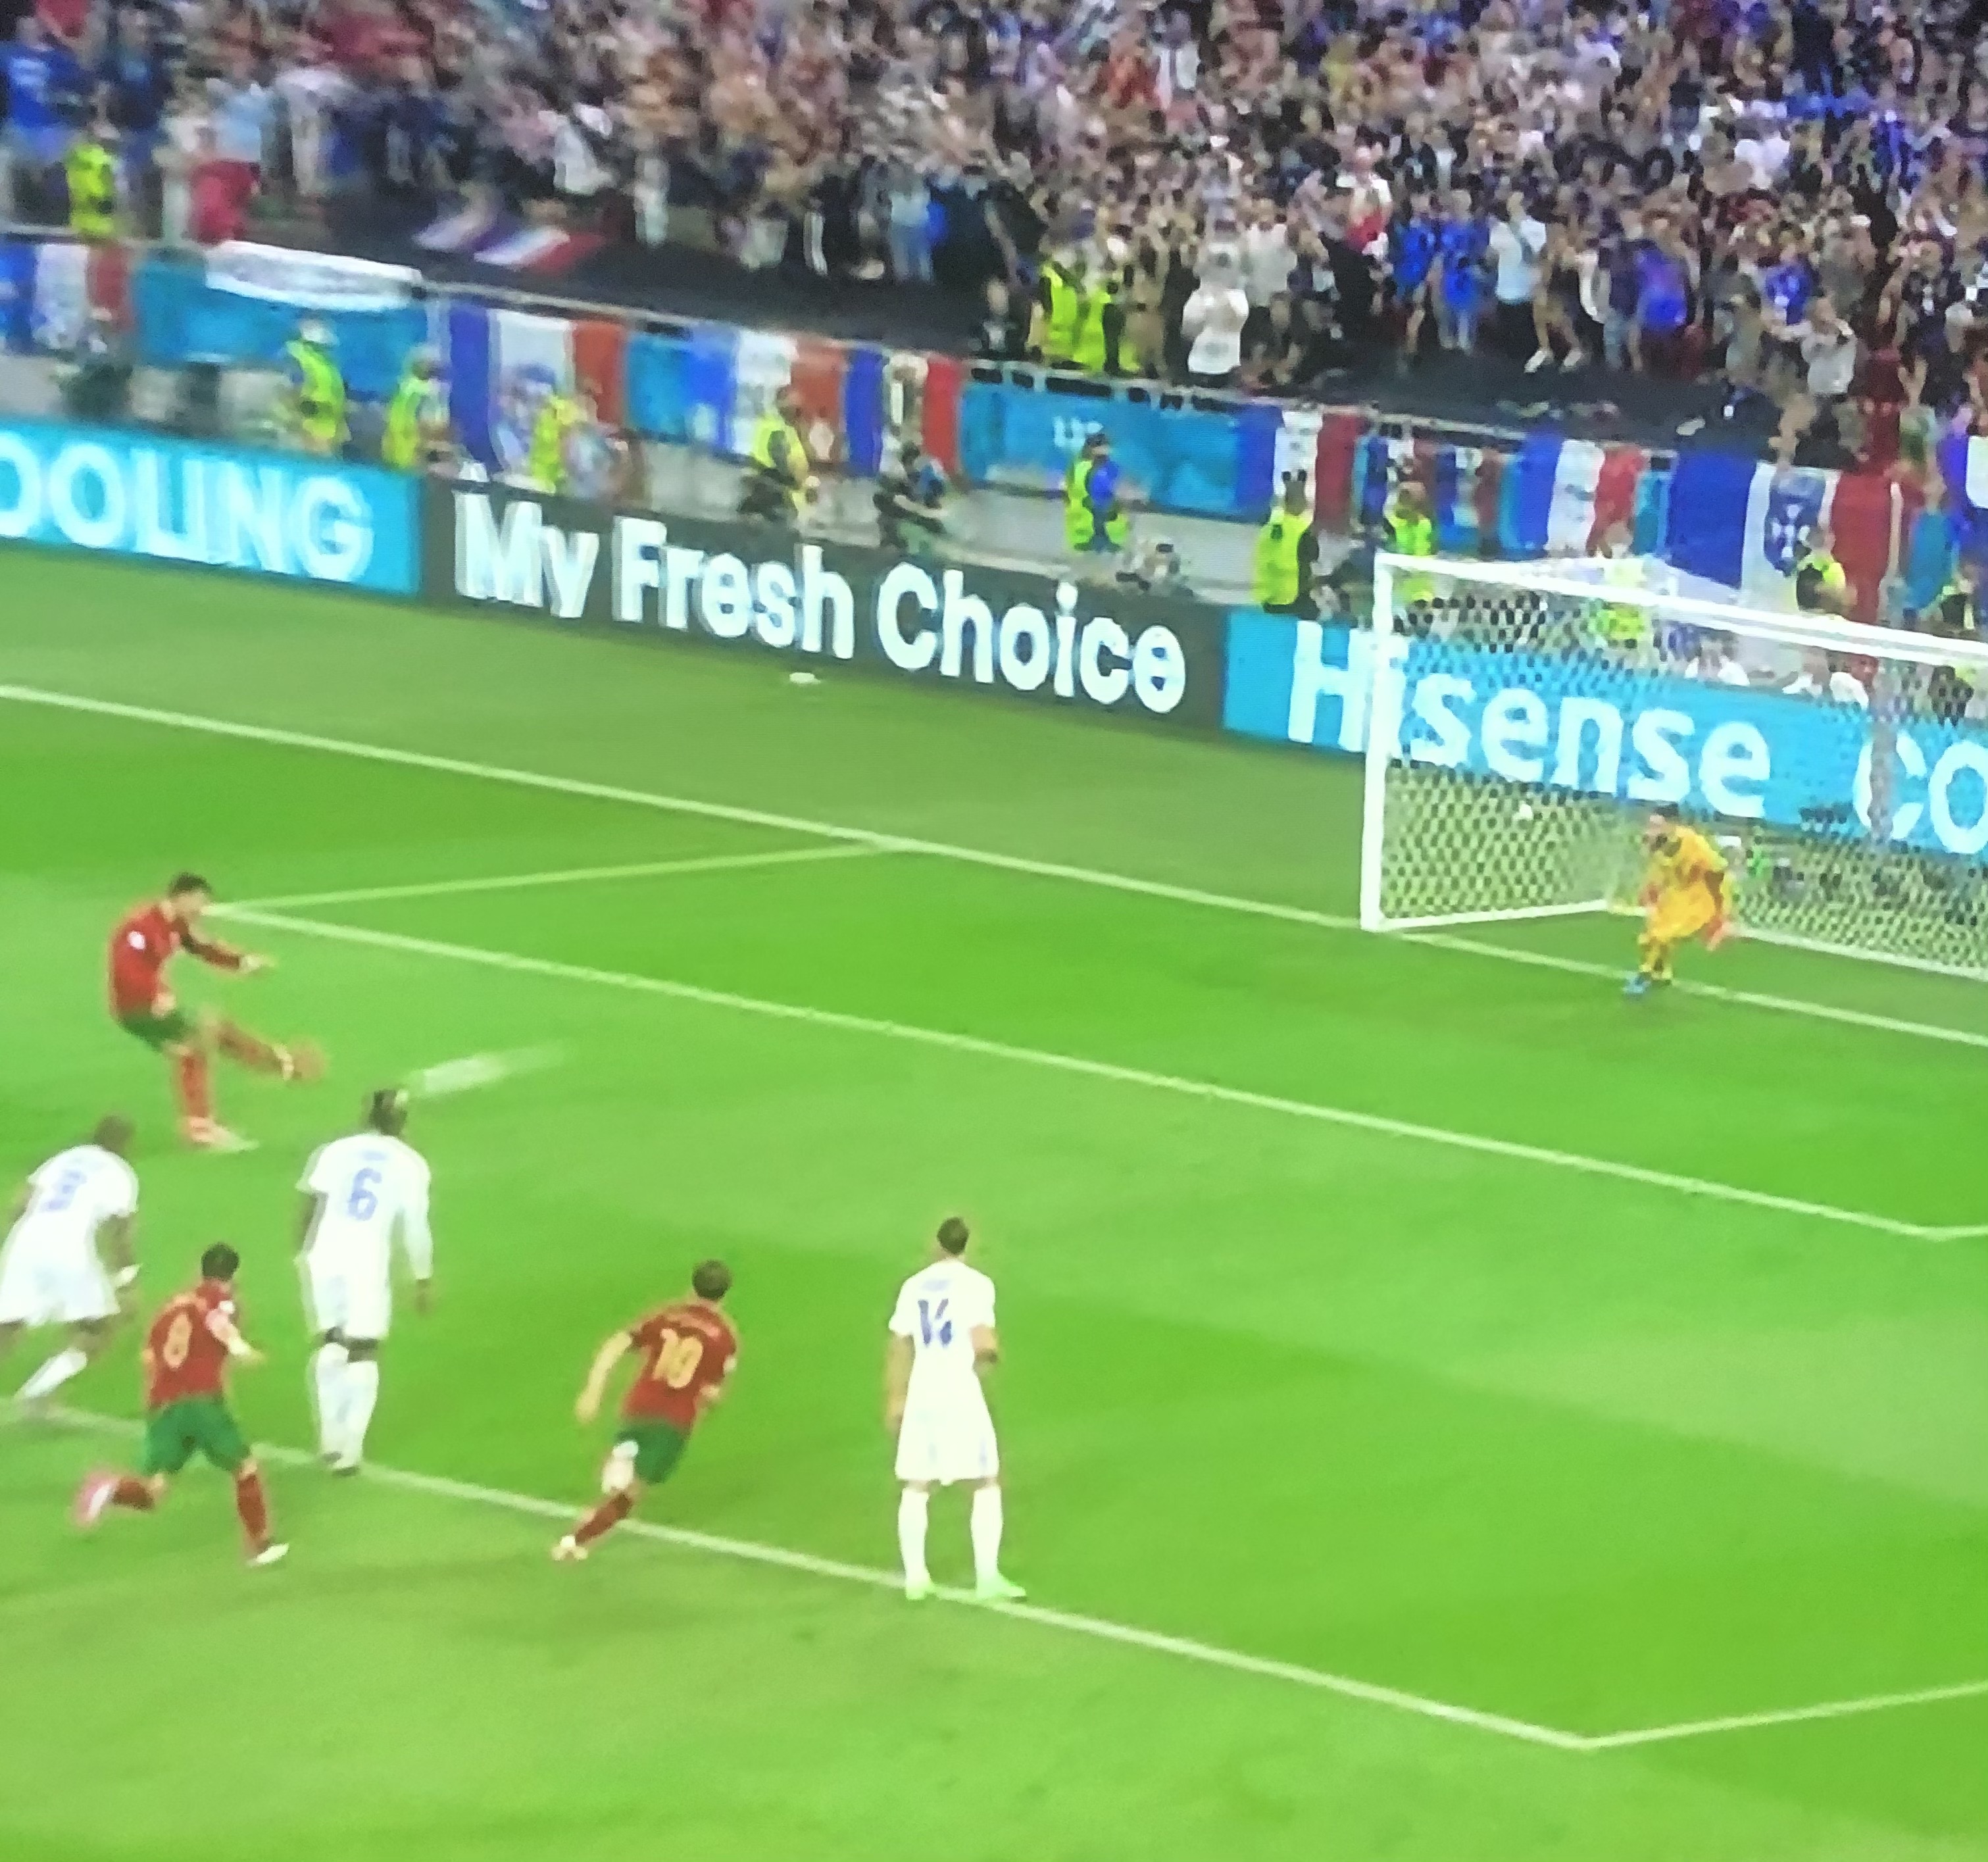 Ronaldo second penatyt goal of the match